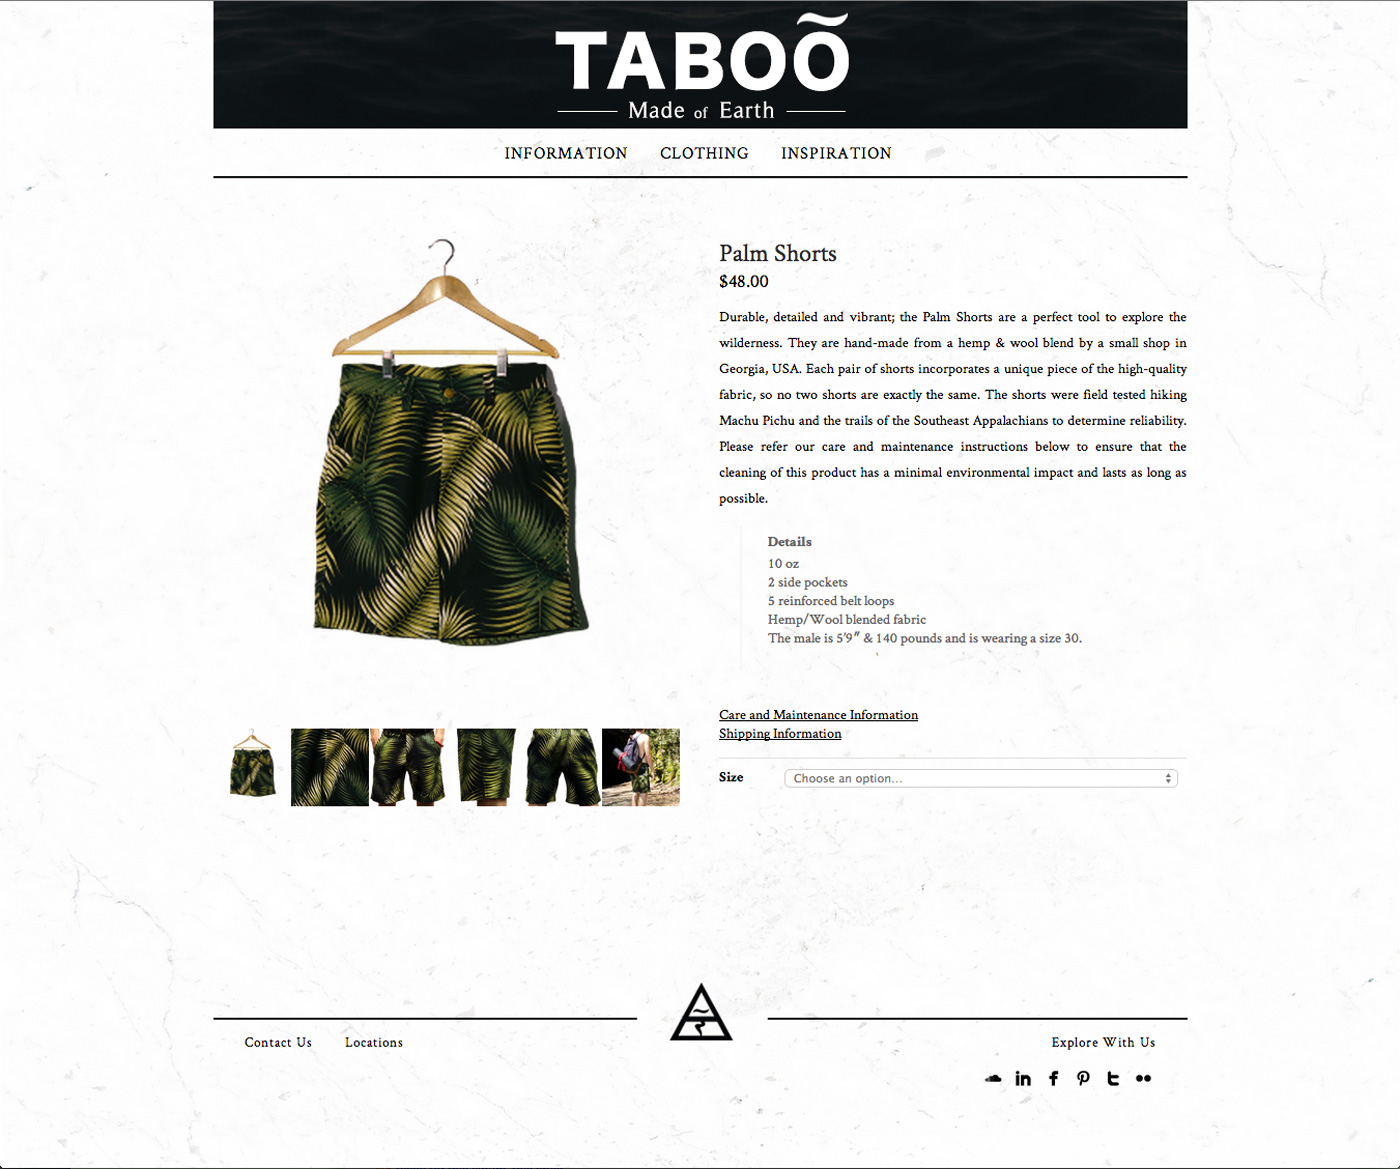 TabooInternational.us – Alternate single product page